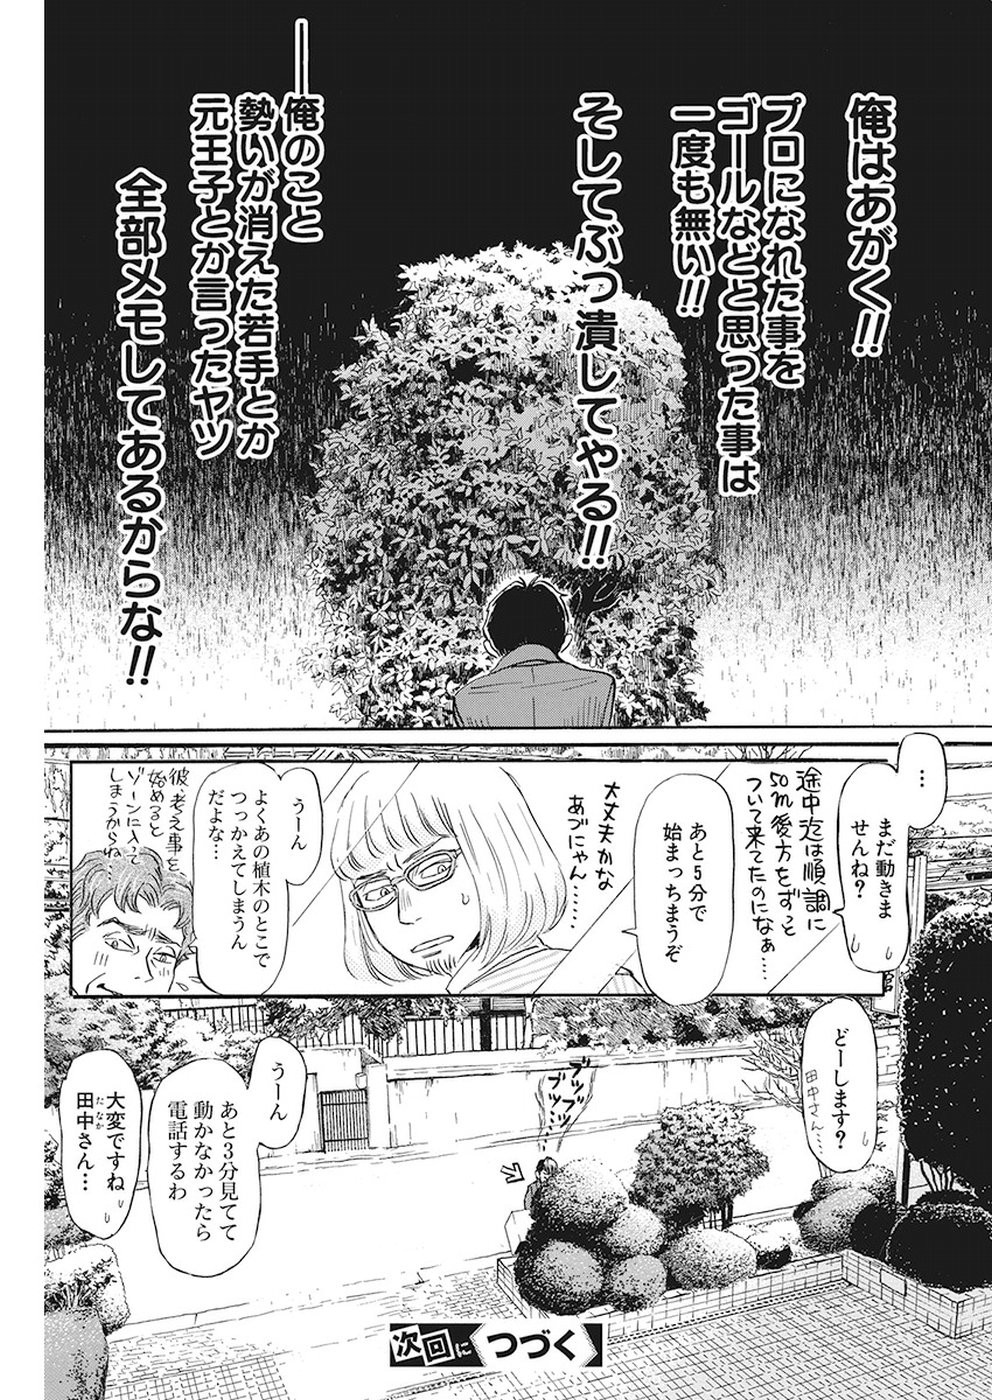 3 Gatsu no Lion - Chapter 156 - Page 12